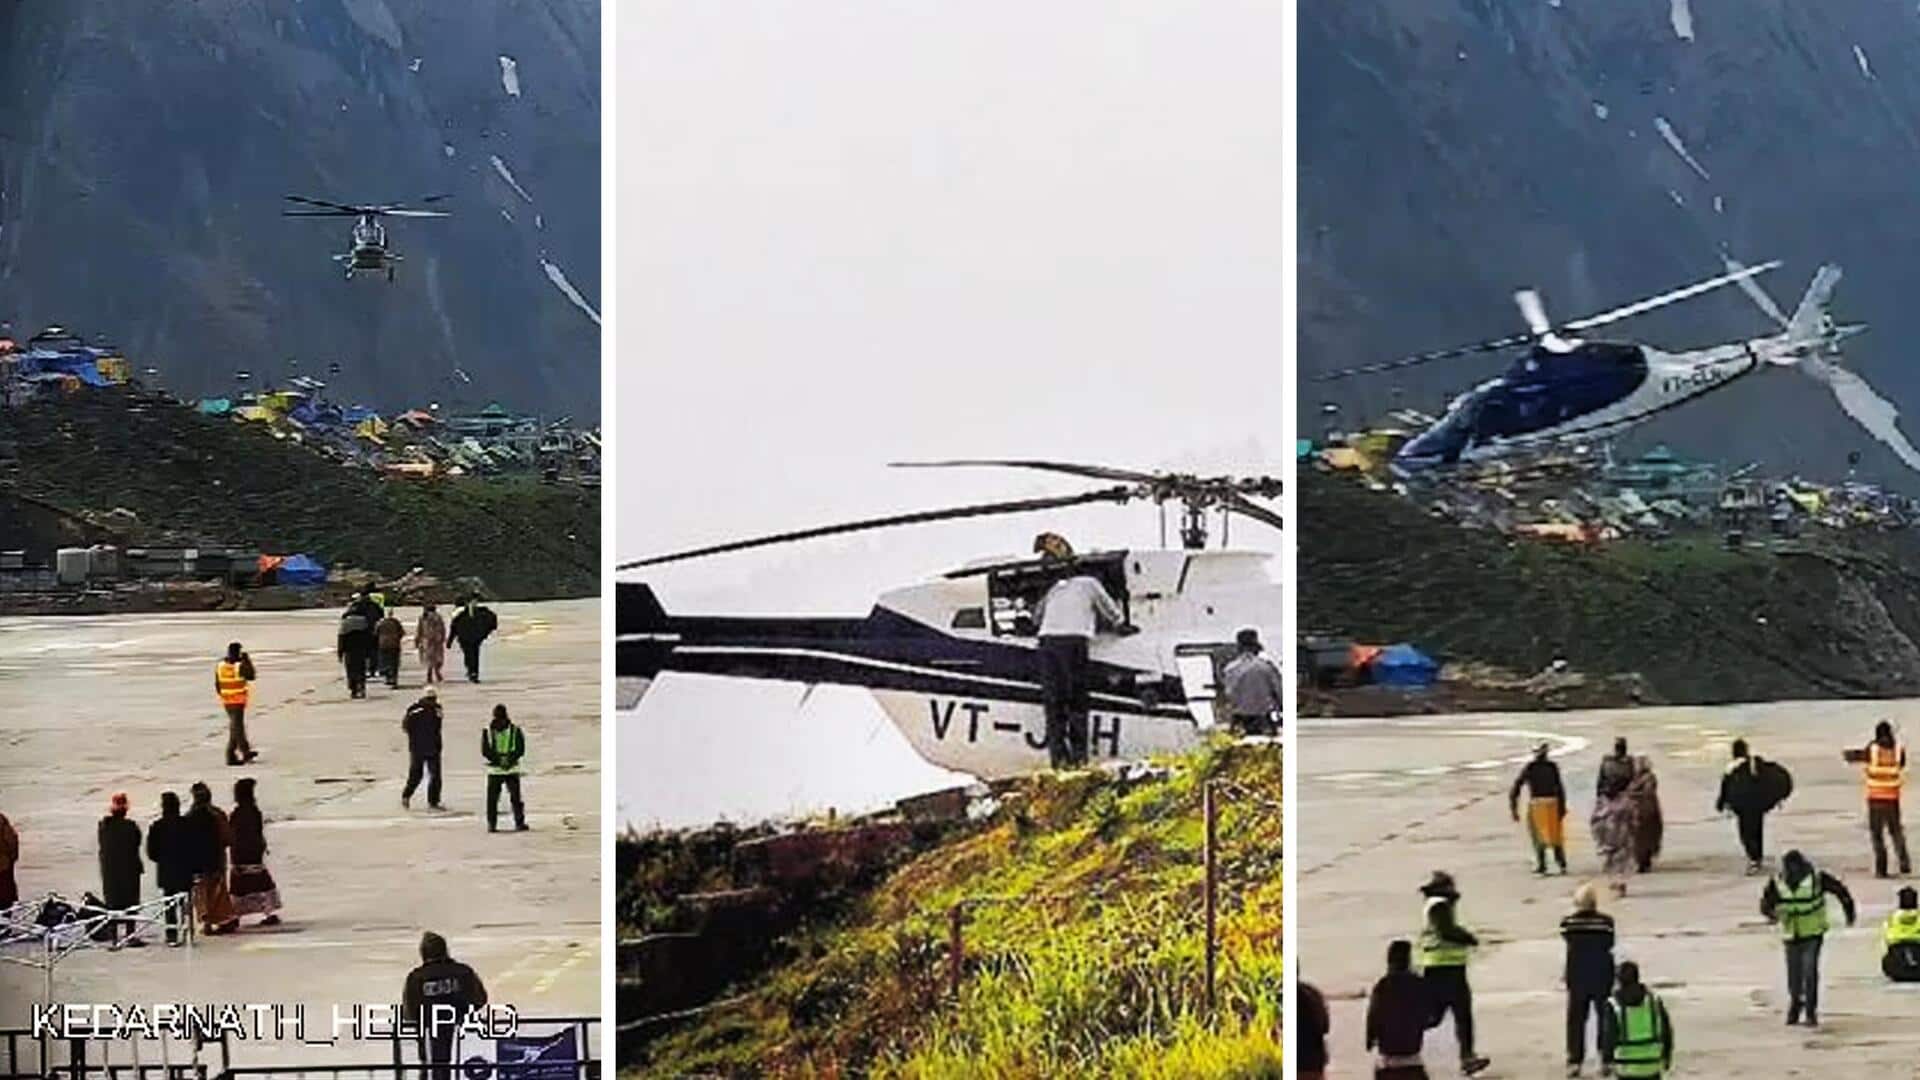 Video: Helicopter carrying 6 pilgrims makes emergency landing near Kedarnath